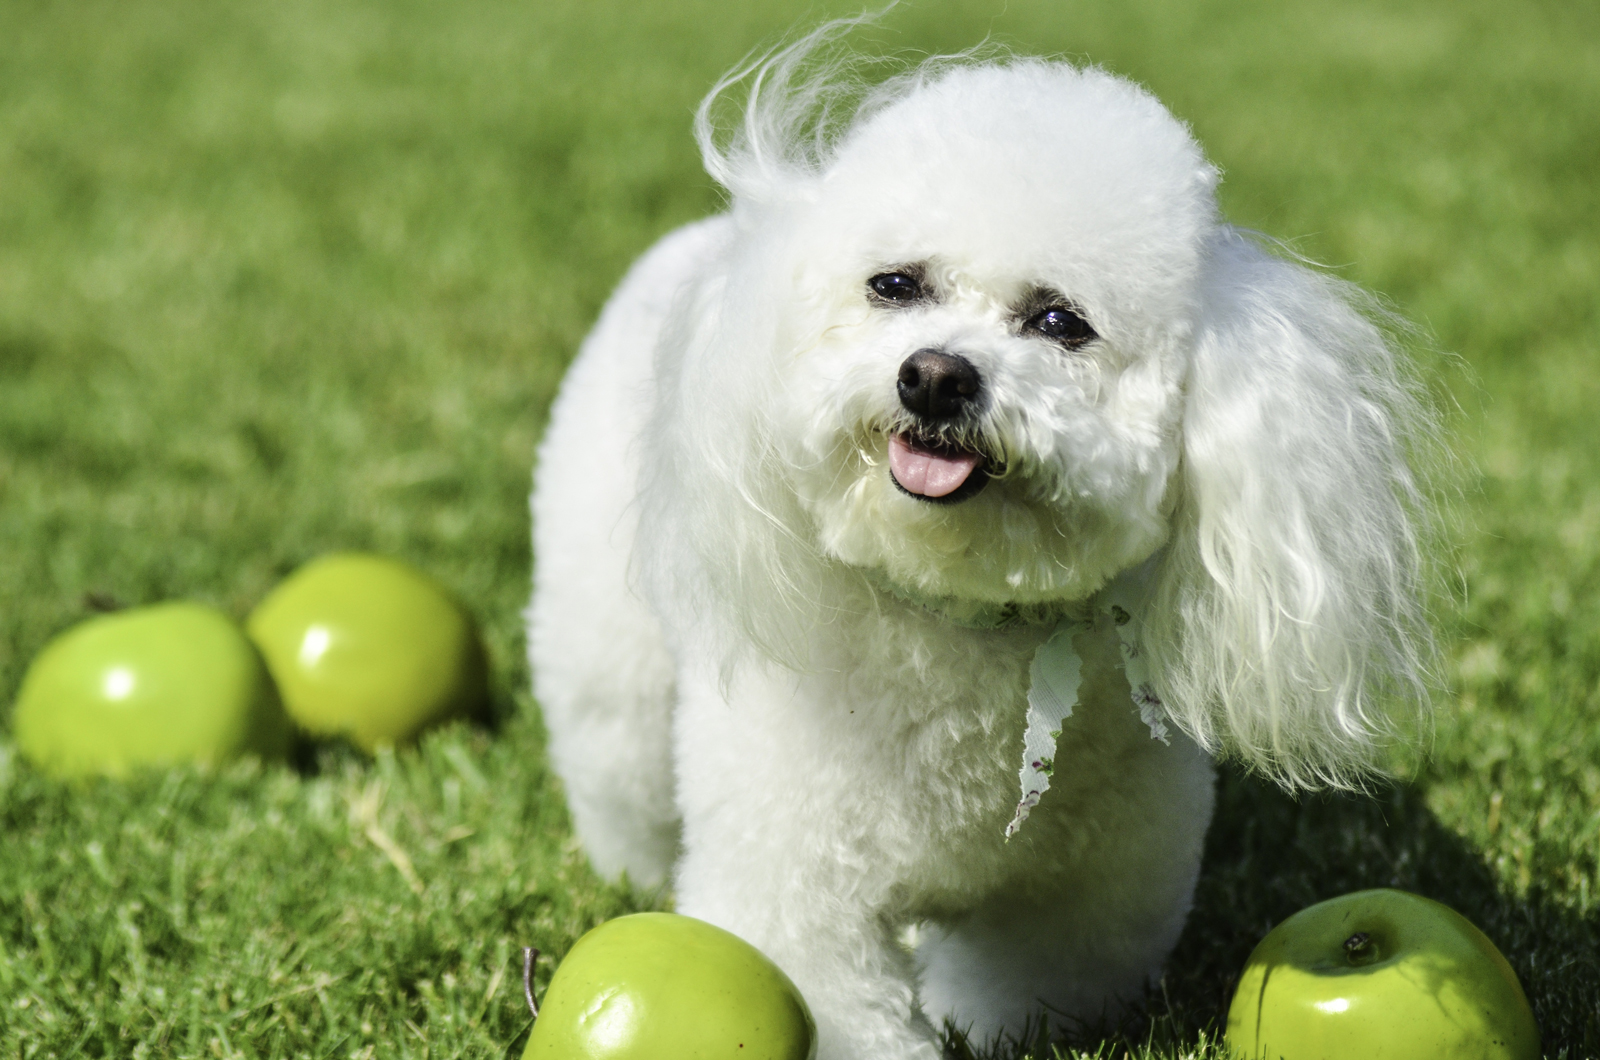 A Bichon Frise dog walking inbetween apples on some grass